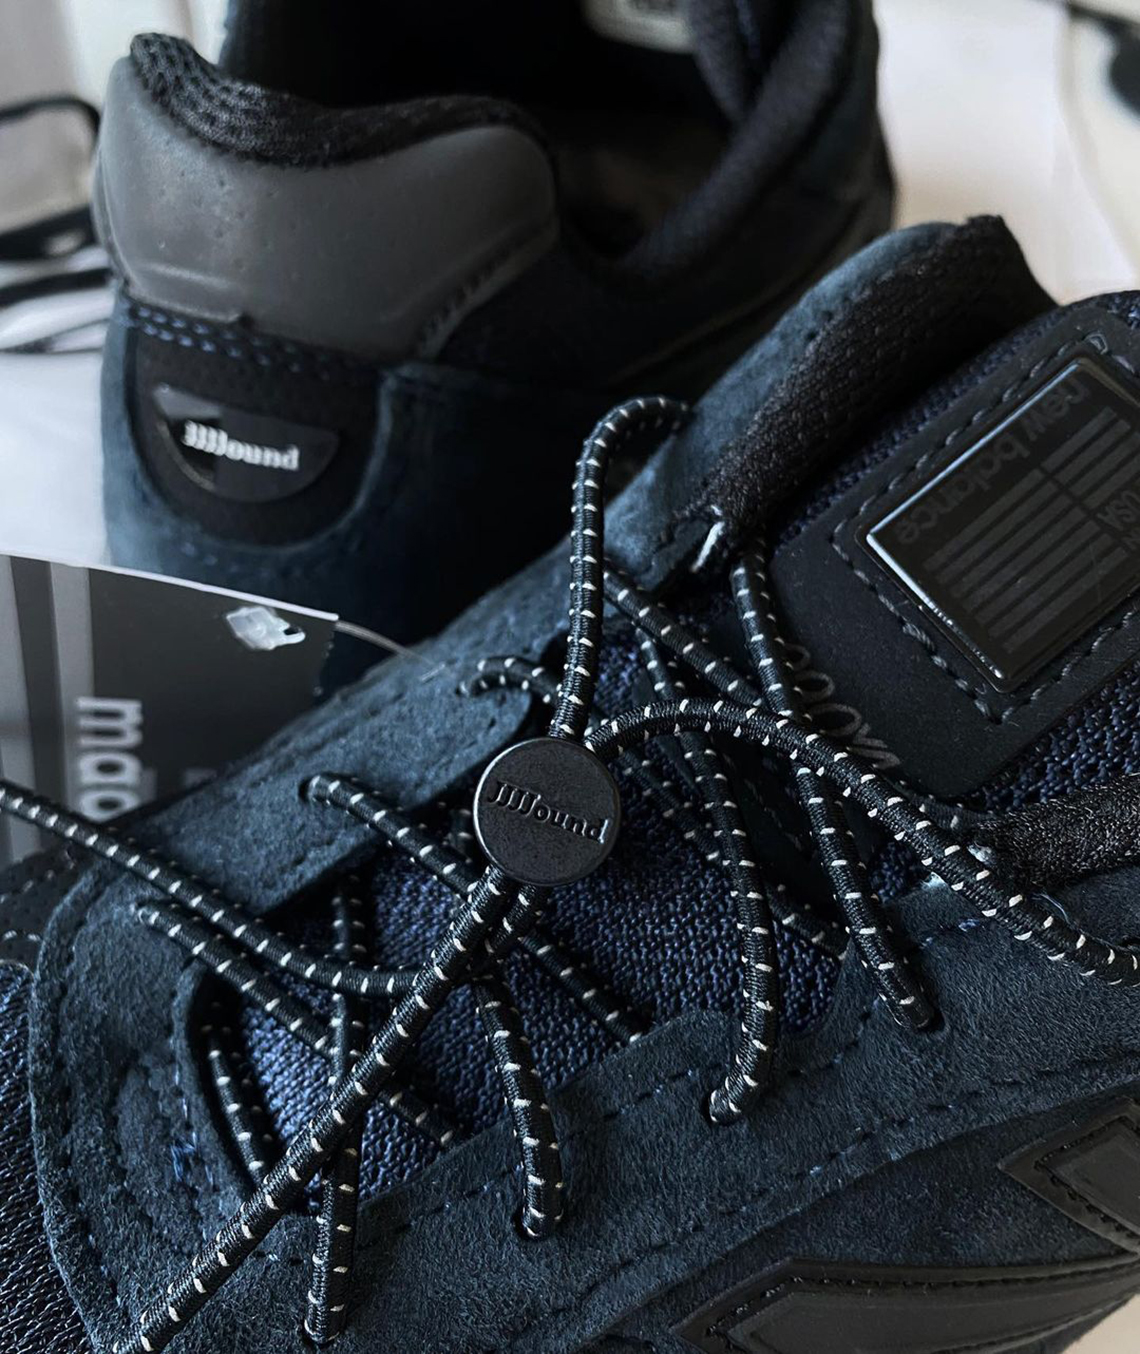 JJJJound New Balance 990v4 Navy Black Release | SneakerNews.com